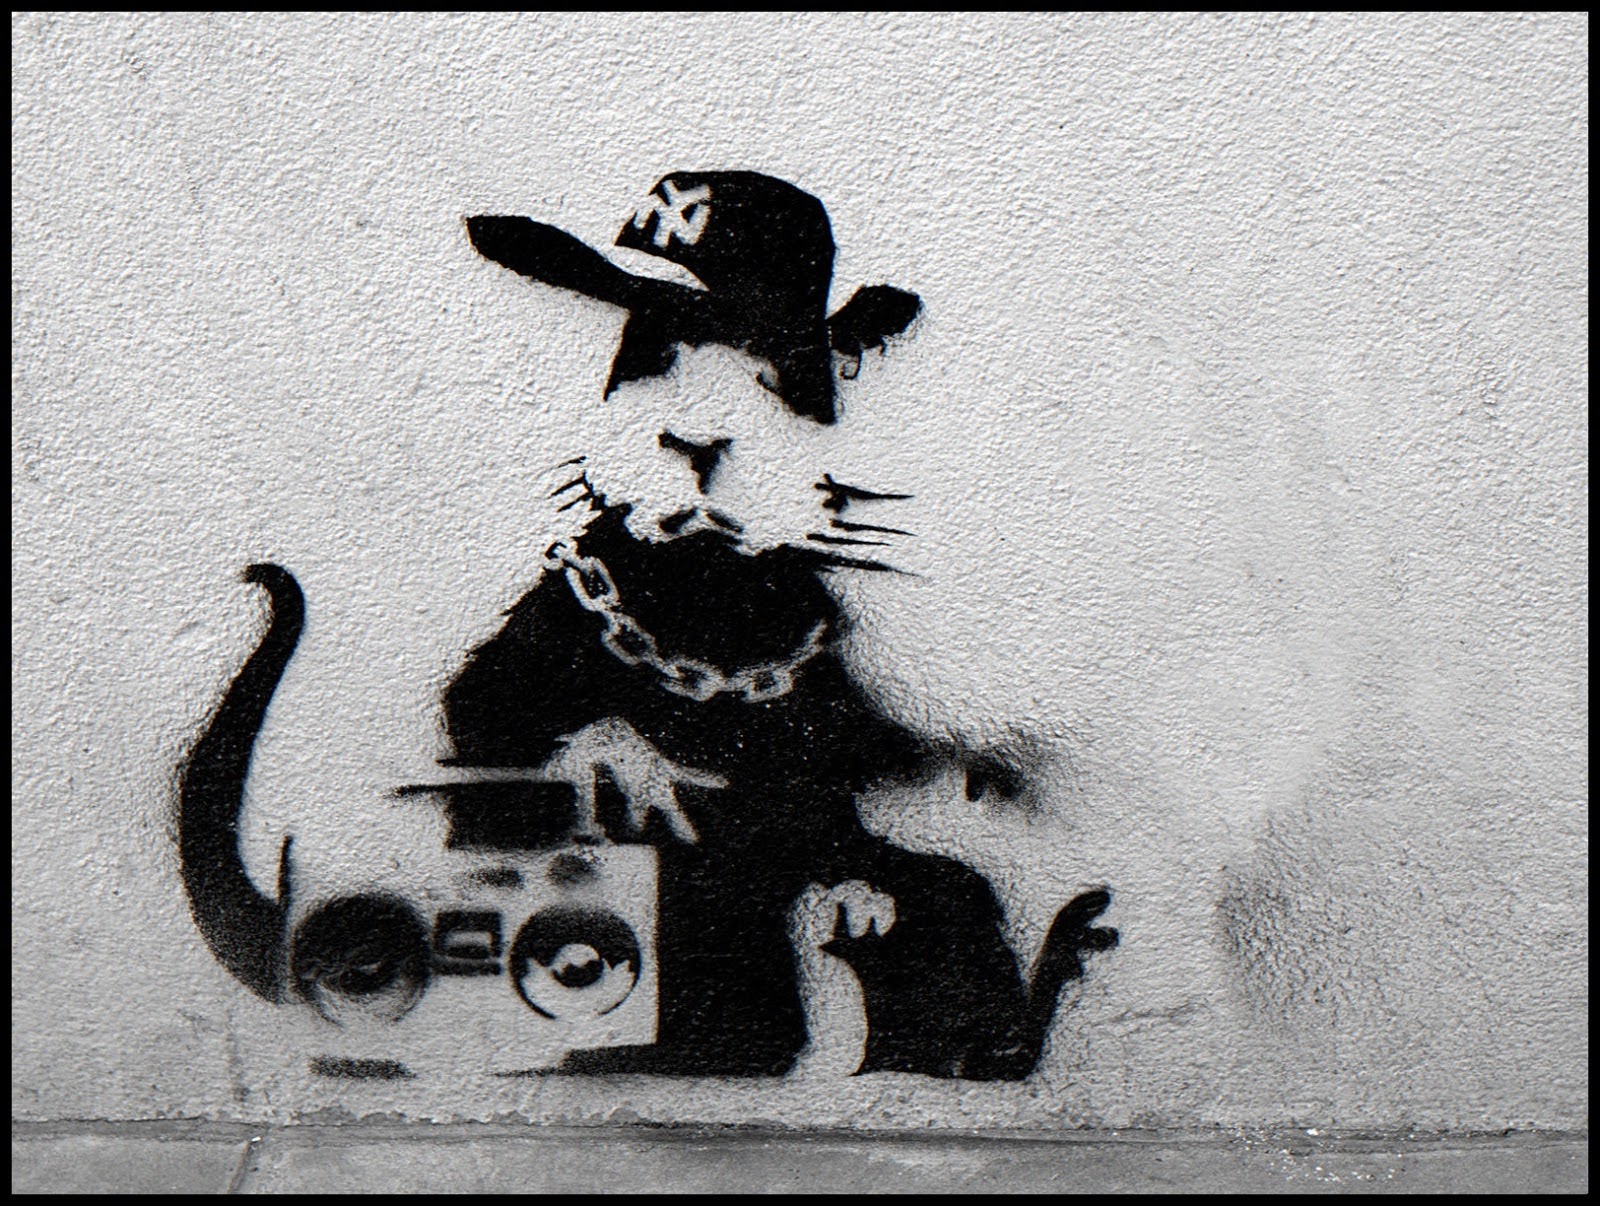 Le Rap Rat de Banksy